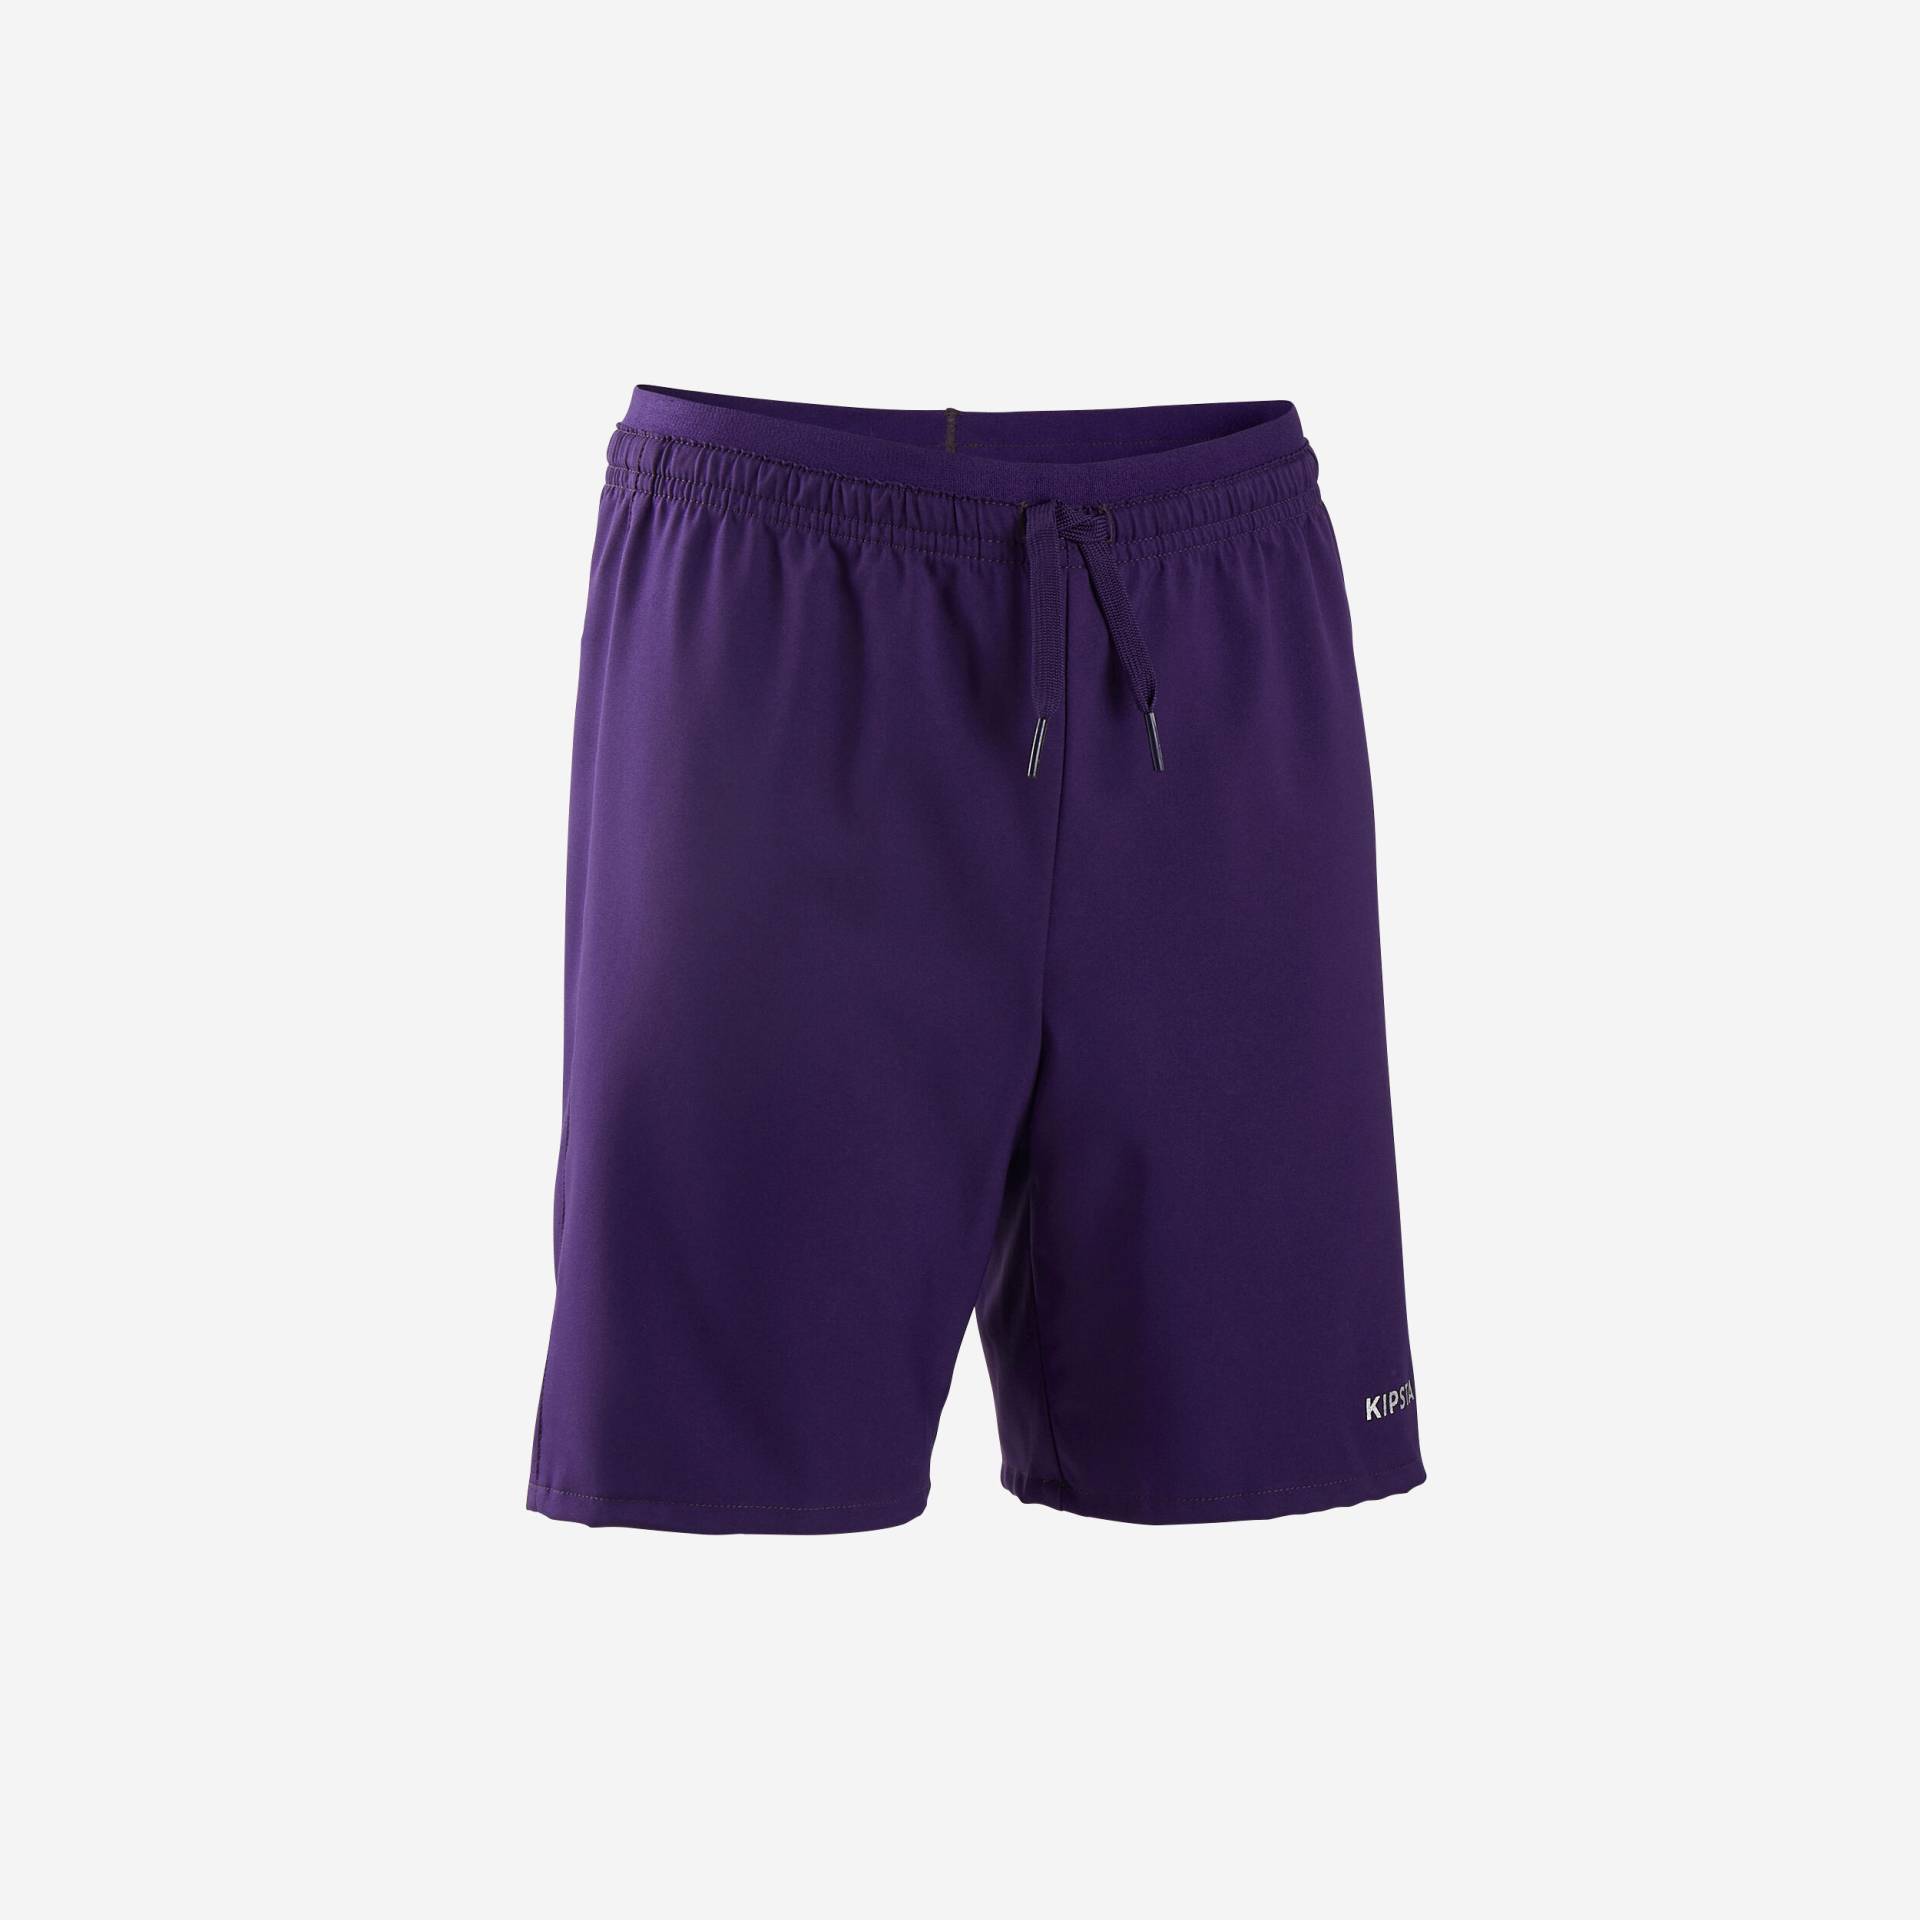 Kinder Fussball Shorts VIRALTO violett von KIPSTA